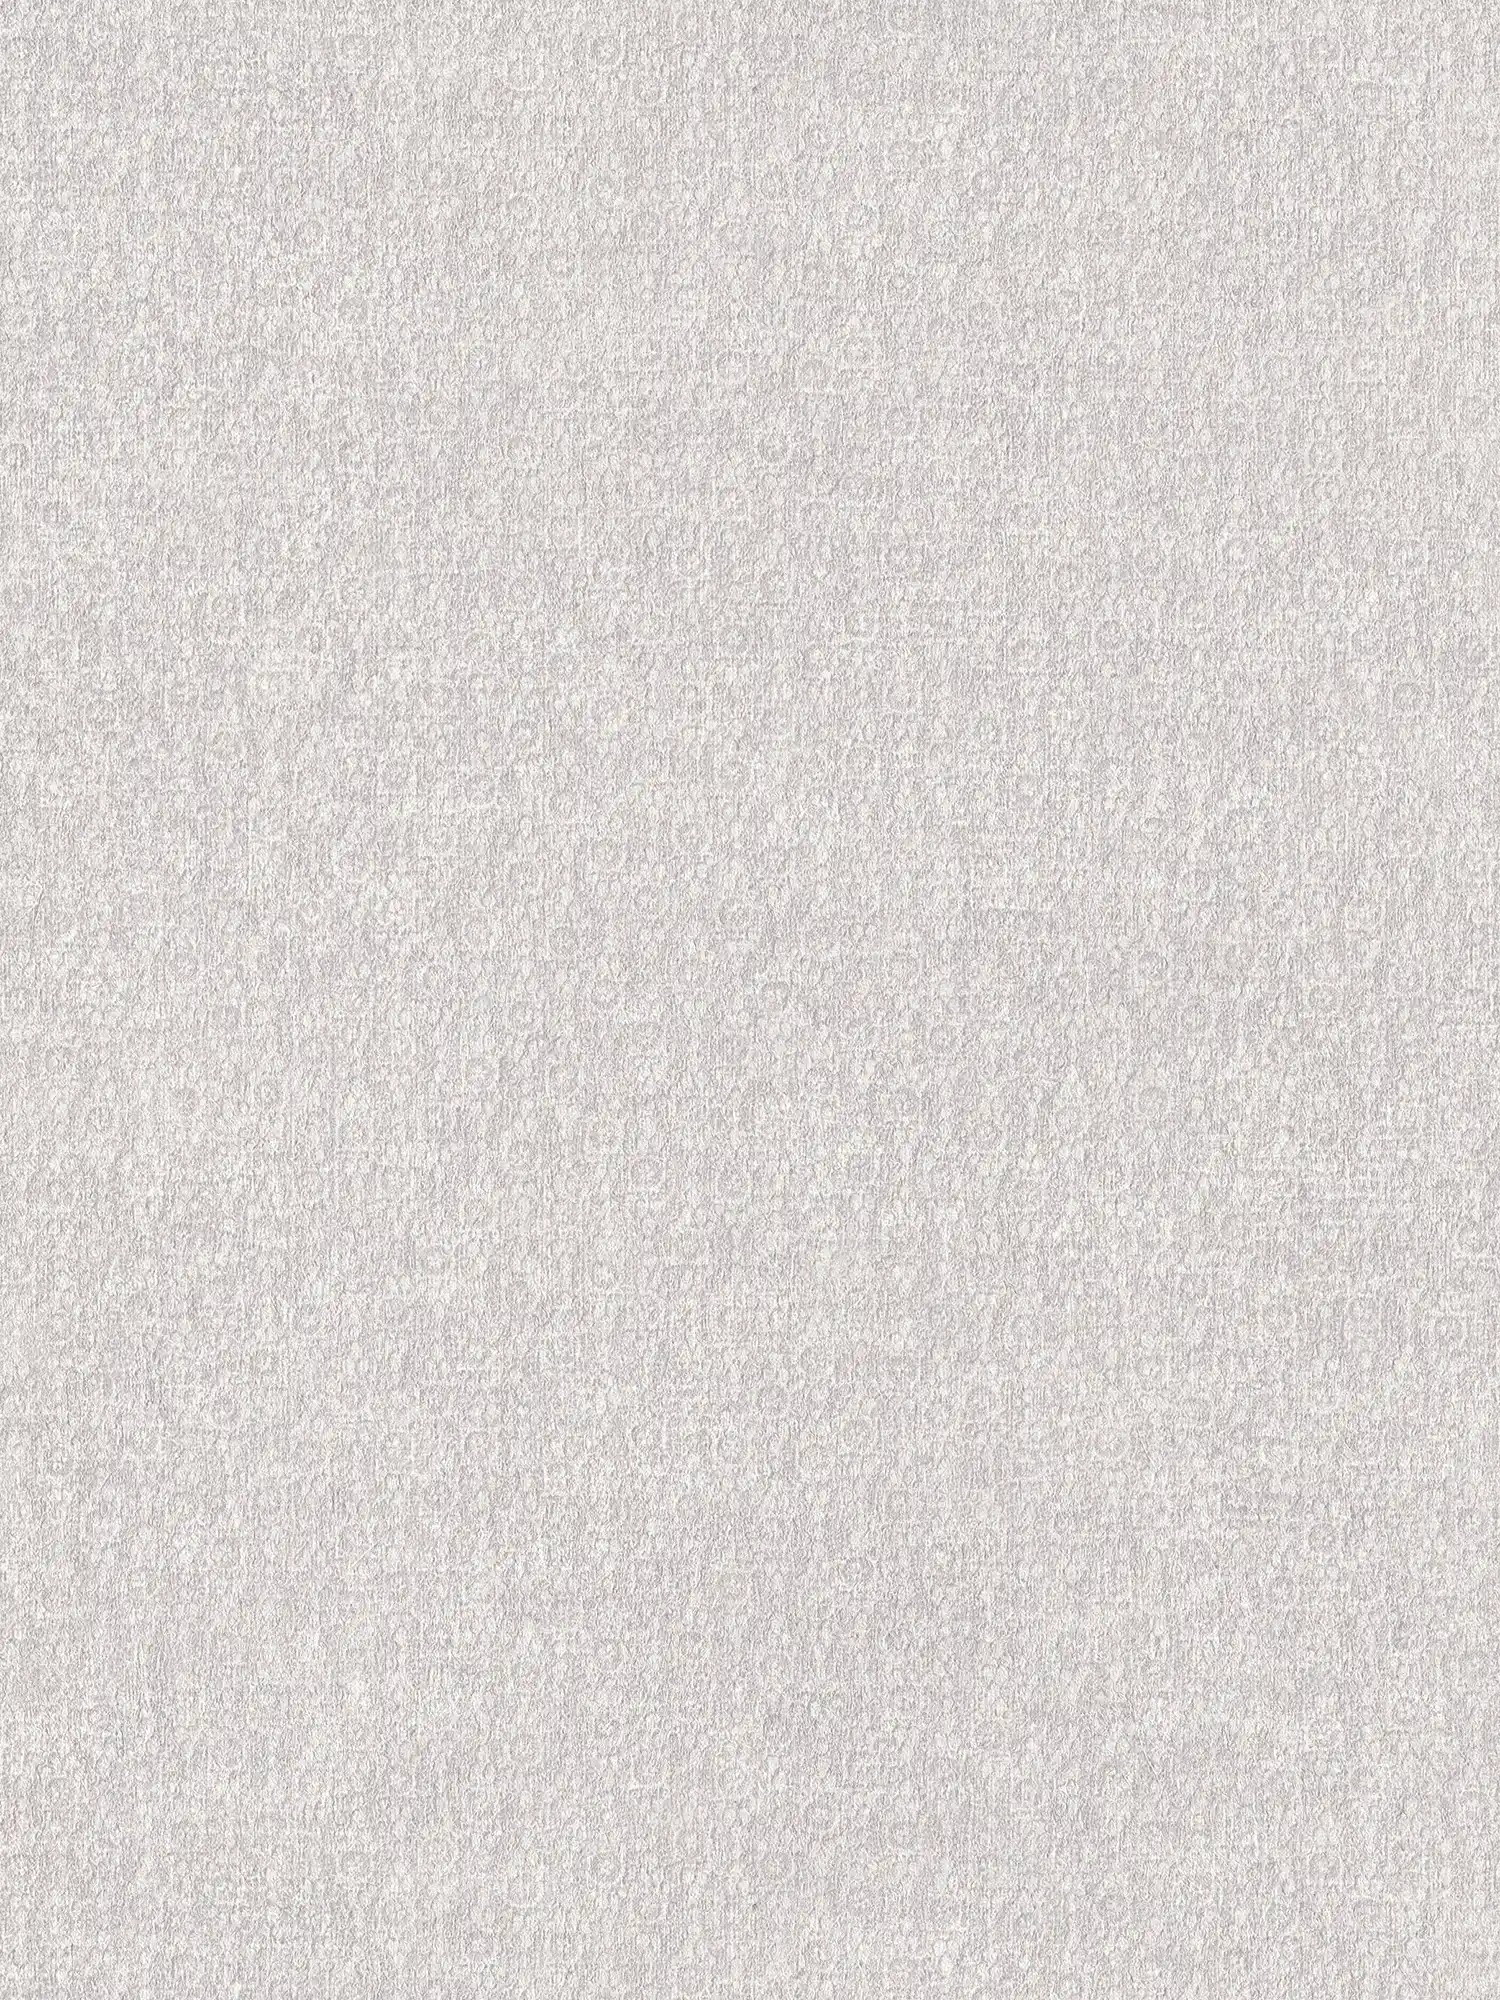 Plain non-woven wallpaper cream with textile texture effect
